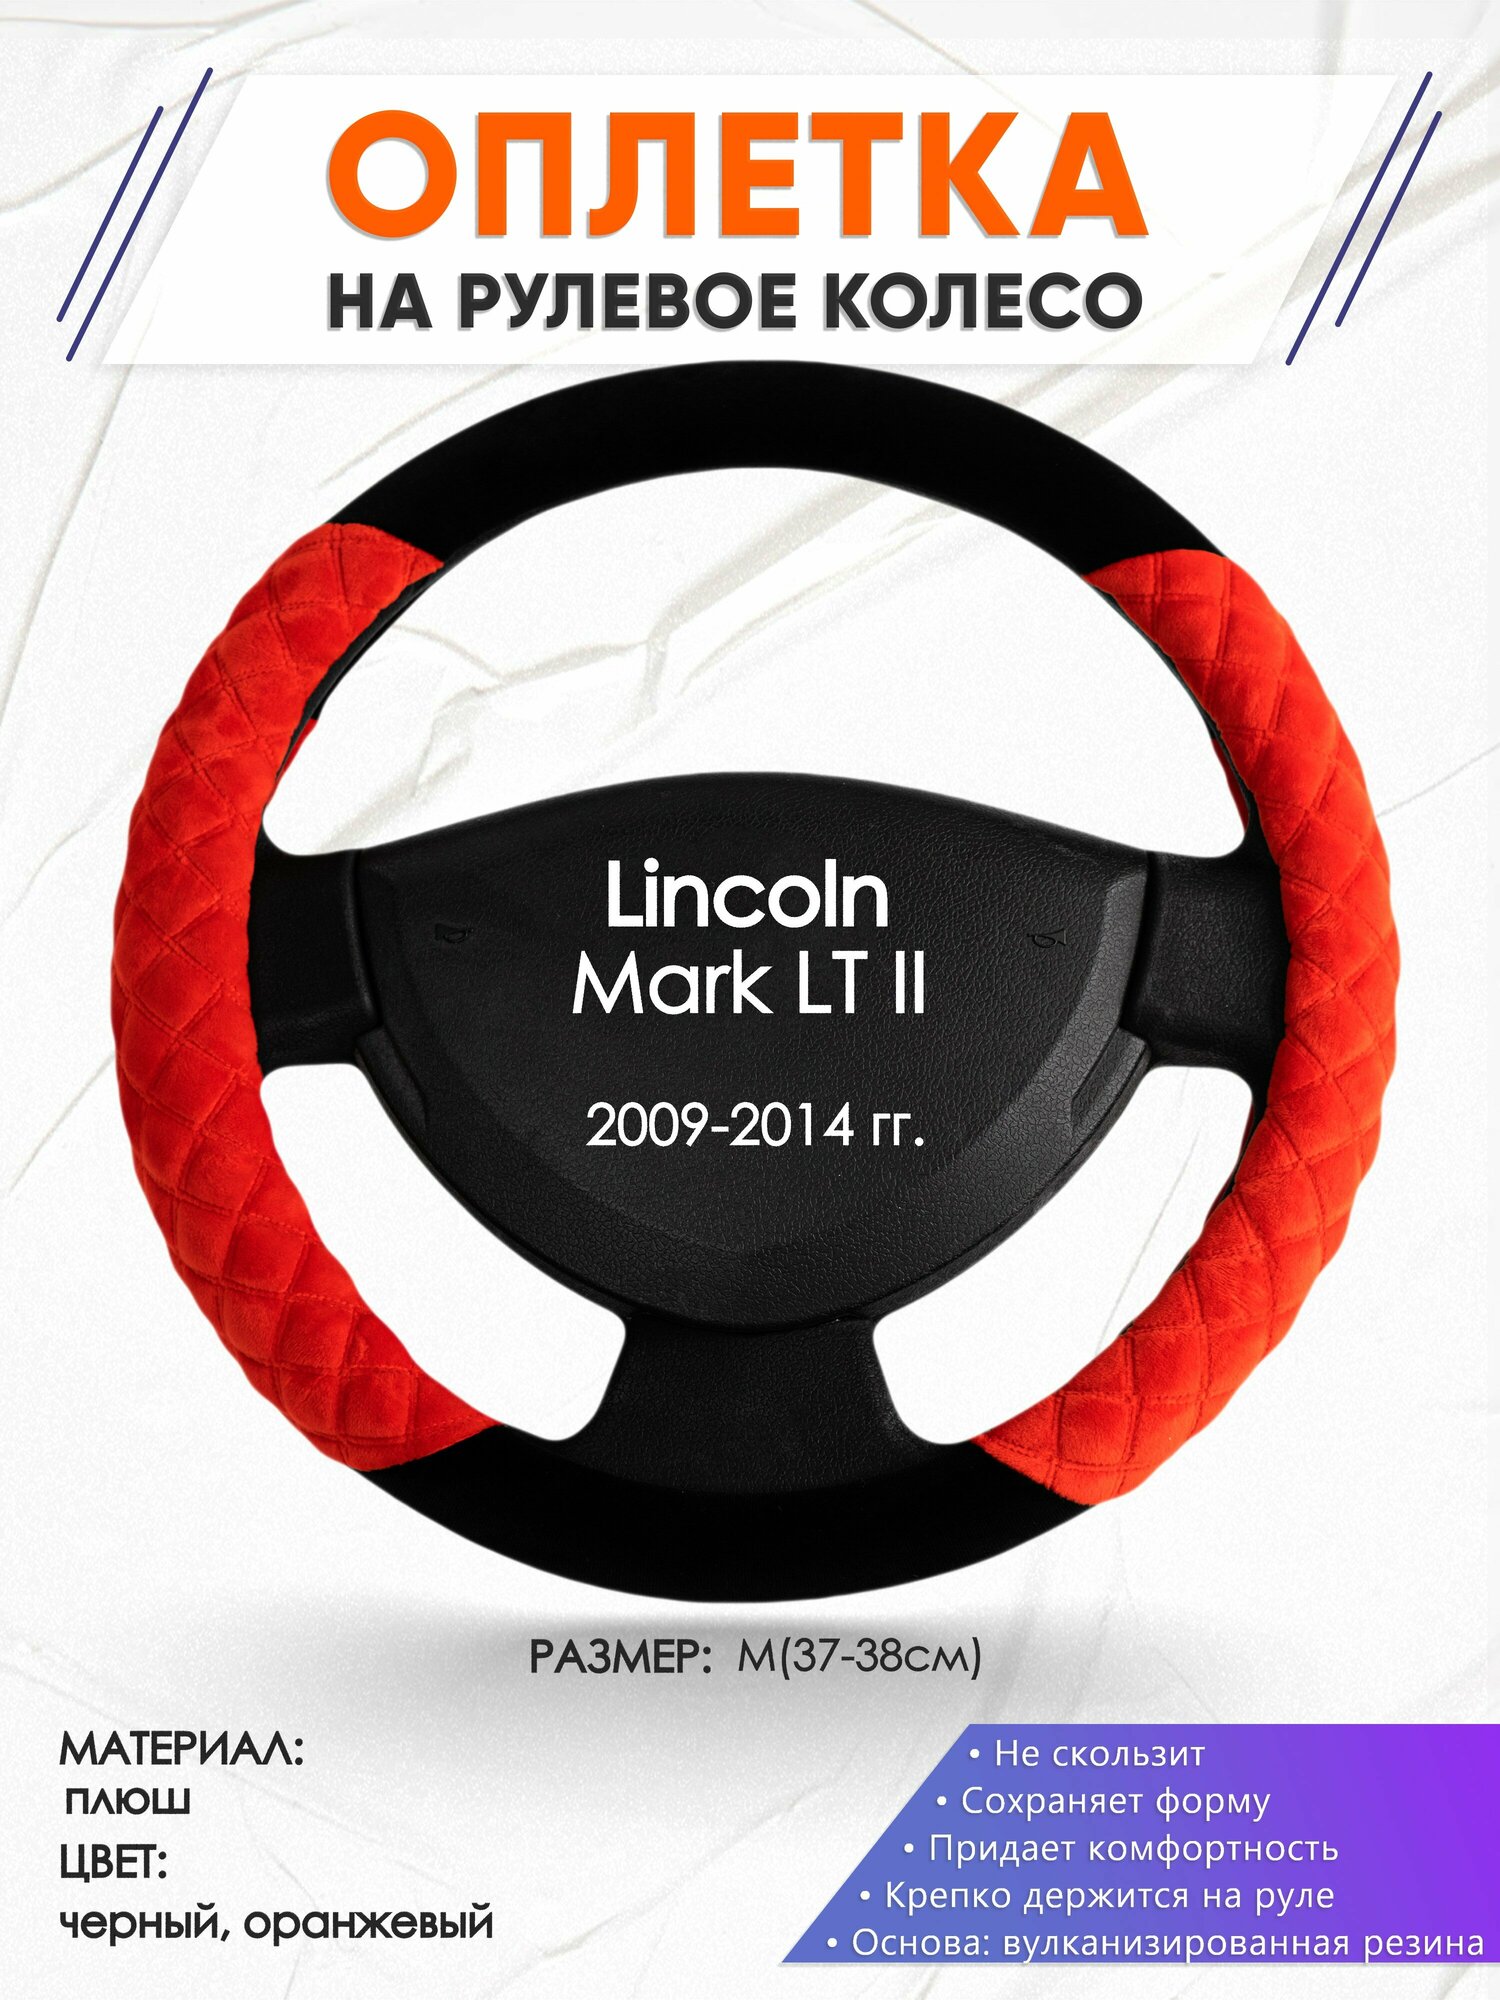 Оплетка наруль для Lincoln Mark LT II(Линкольн Марк лт) 2009-2014 годов выпуска, размер M(37-38см), Замша 37